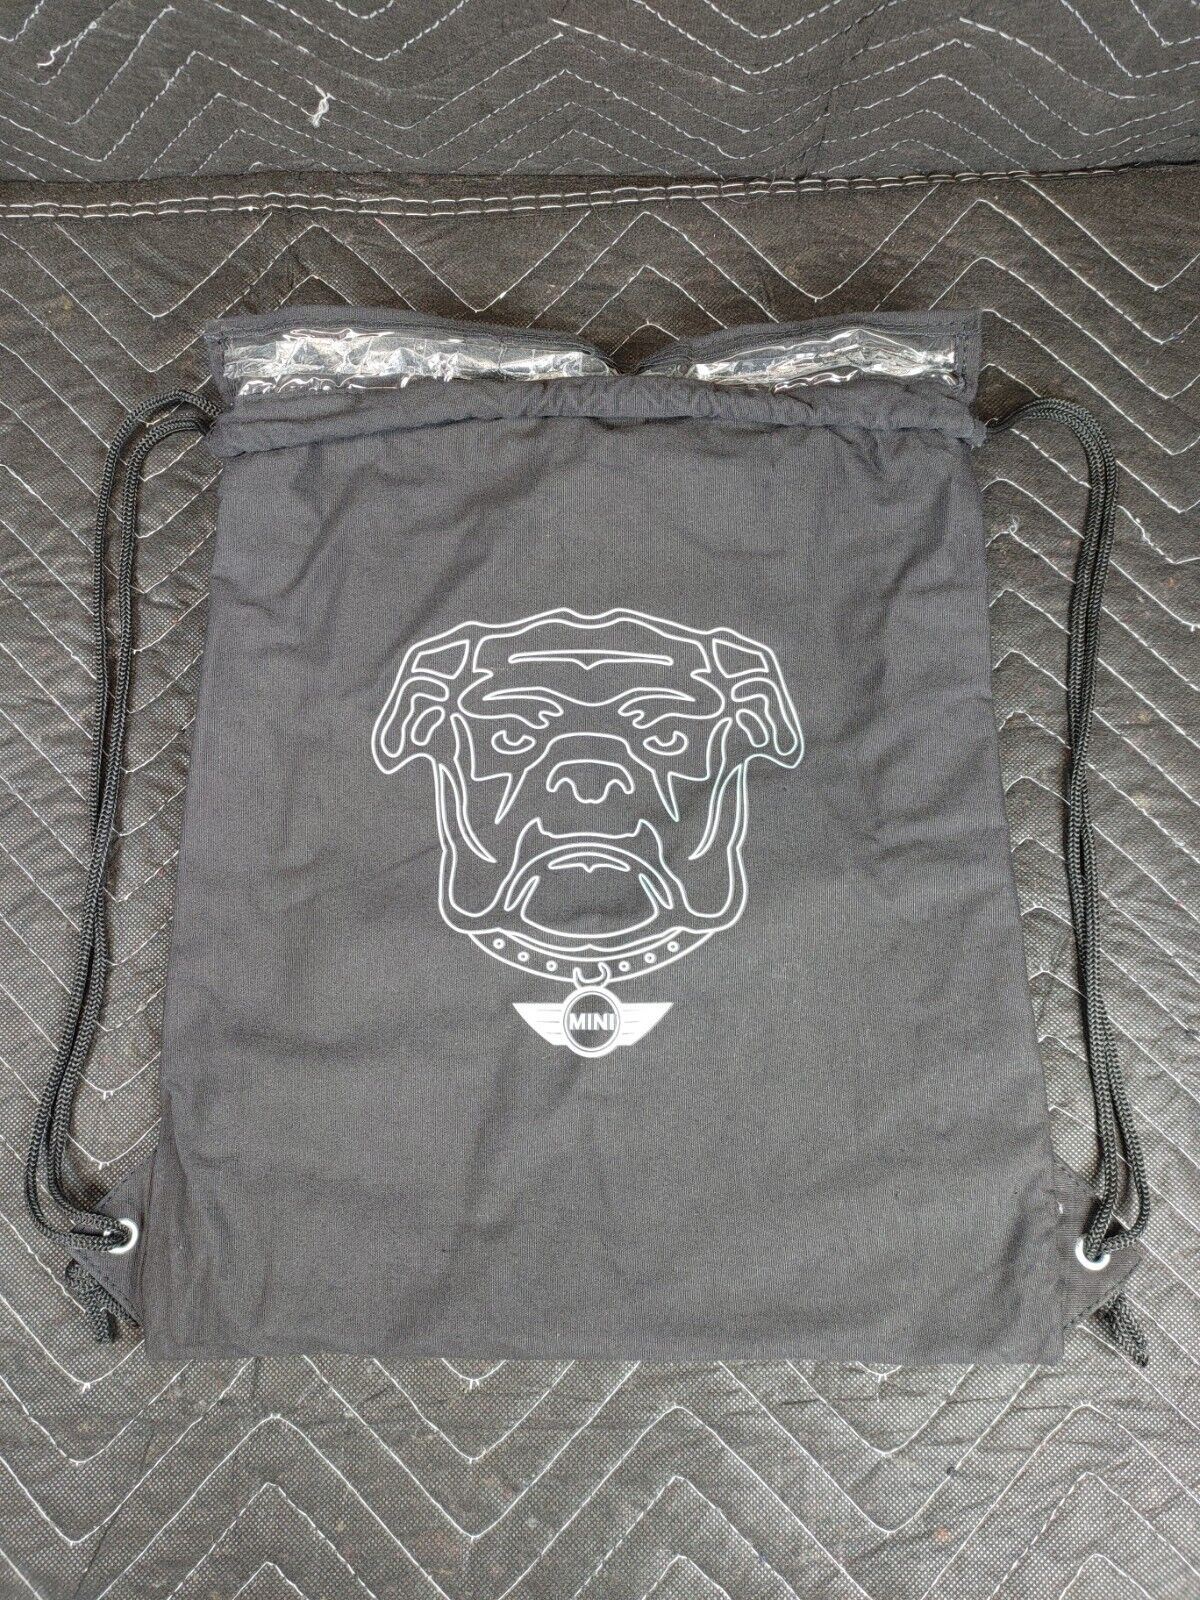 Mini Cooper Car Drawstring Cinch Bag Sack English Bulldog Plastic Lined Logo